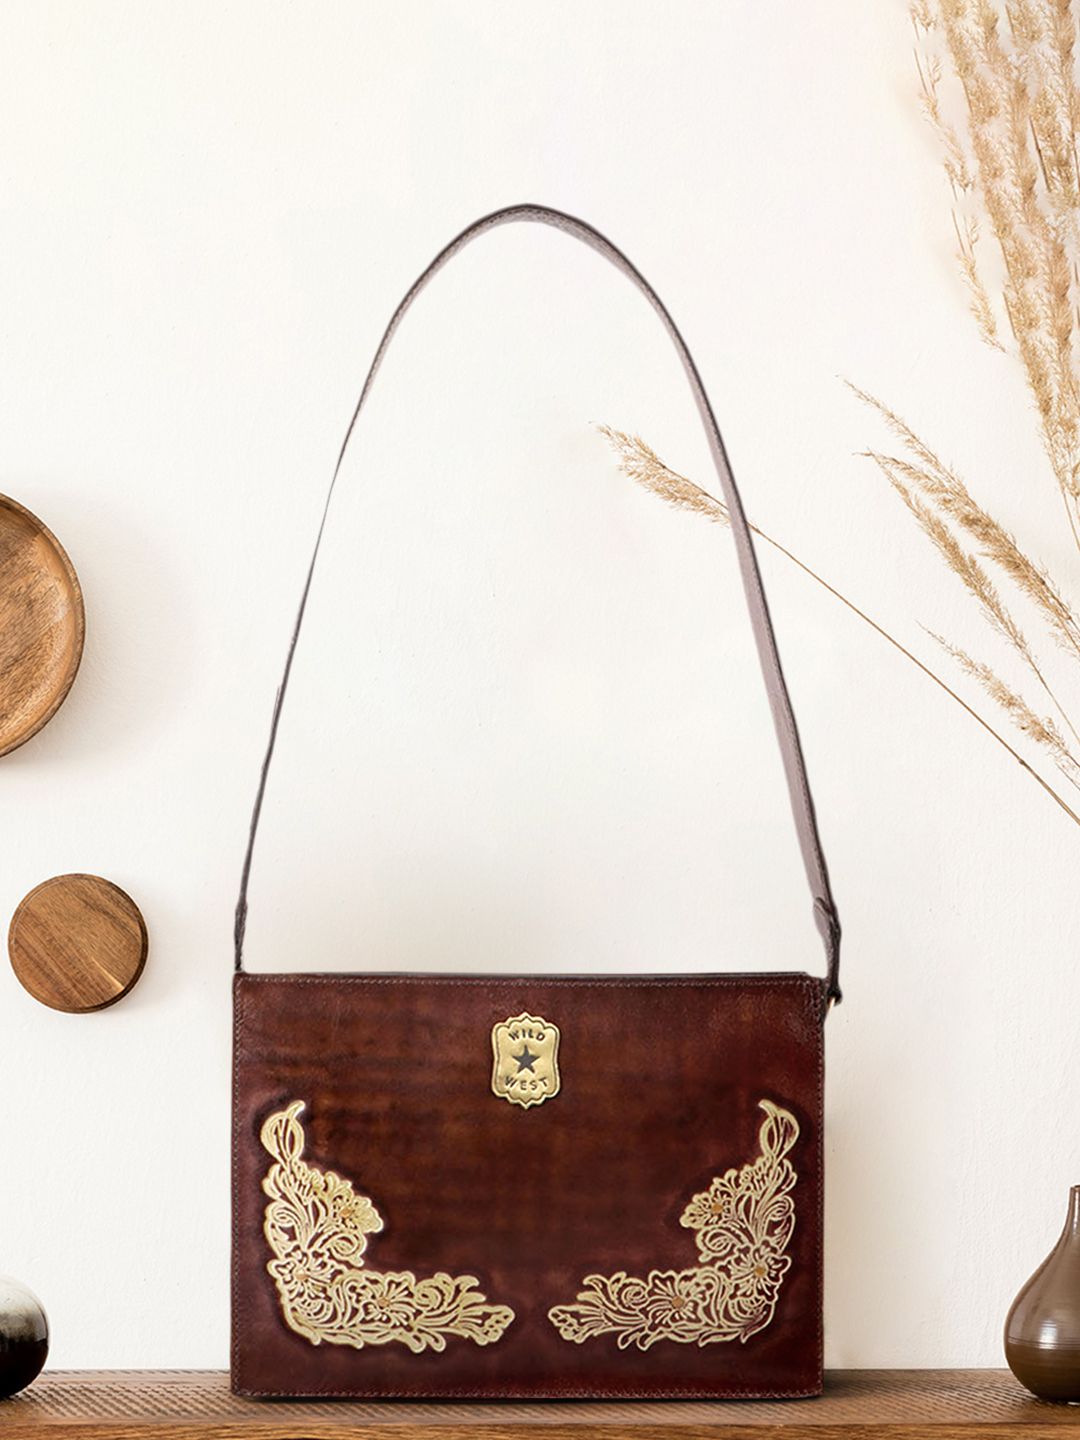 Hidesign Brown & Beige Printed Leather Sling Bag Price in India